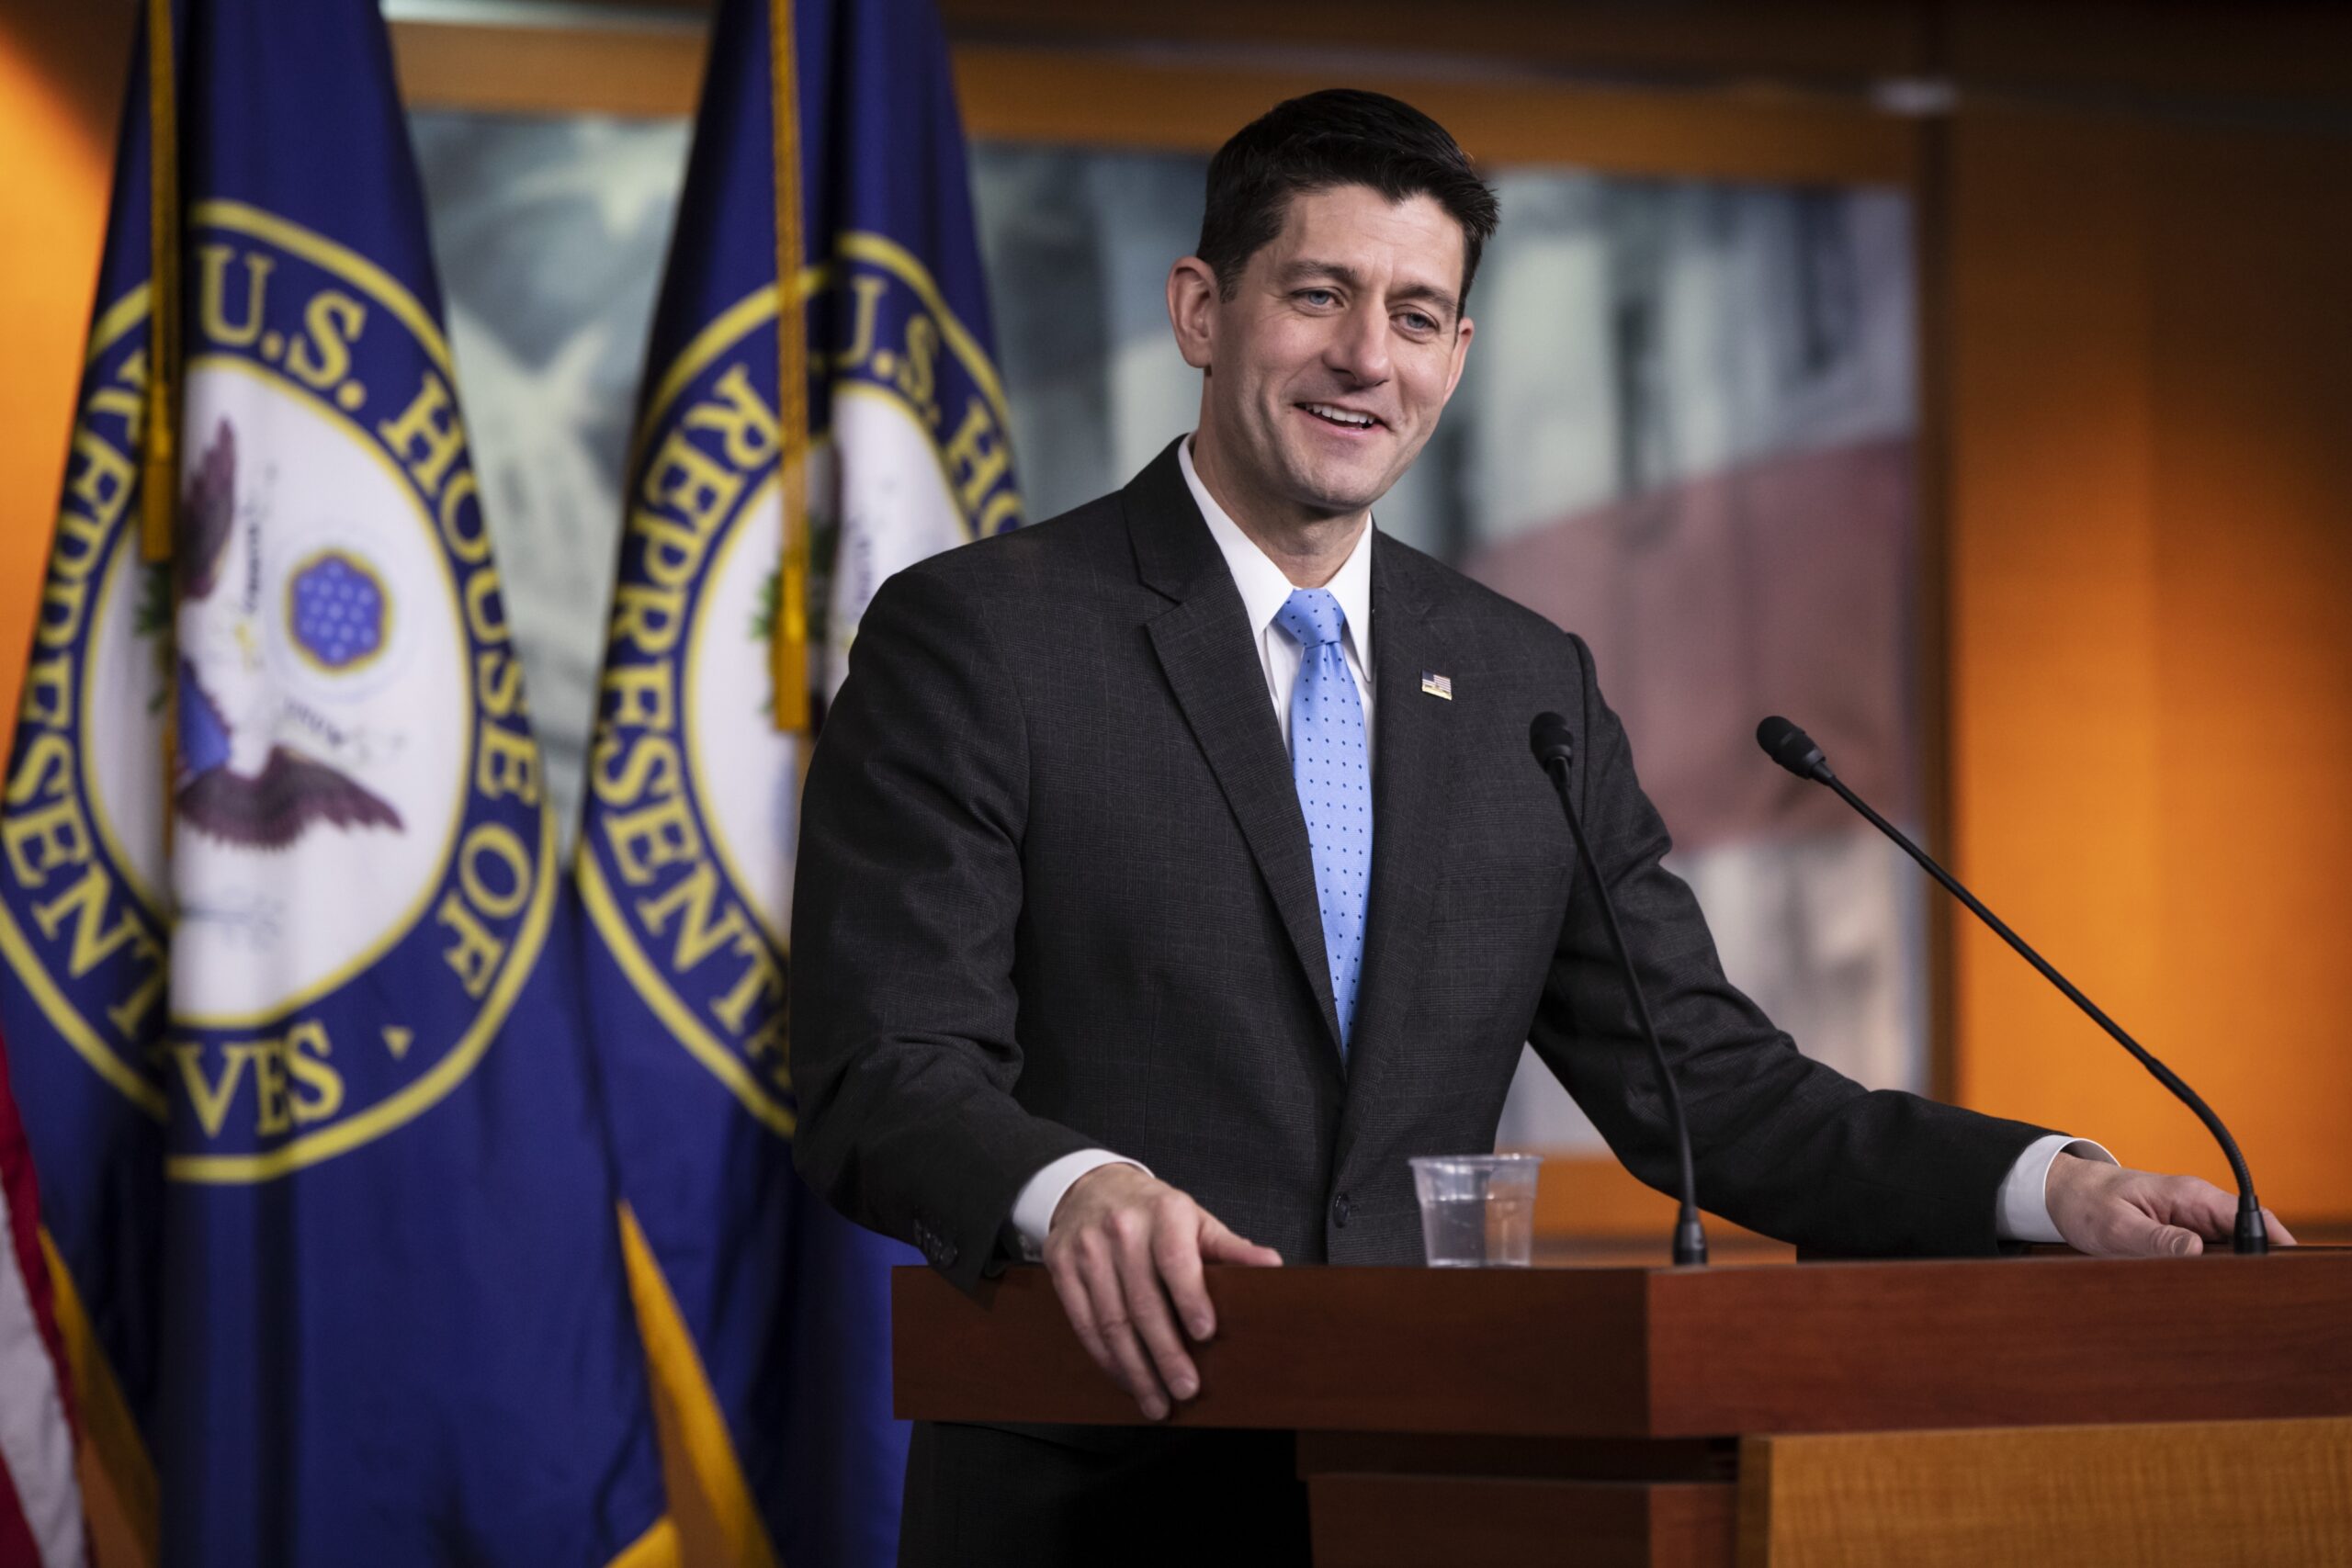 Speaker Paul Ryan United States Congress Retirement Reelection